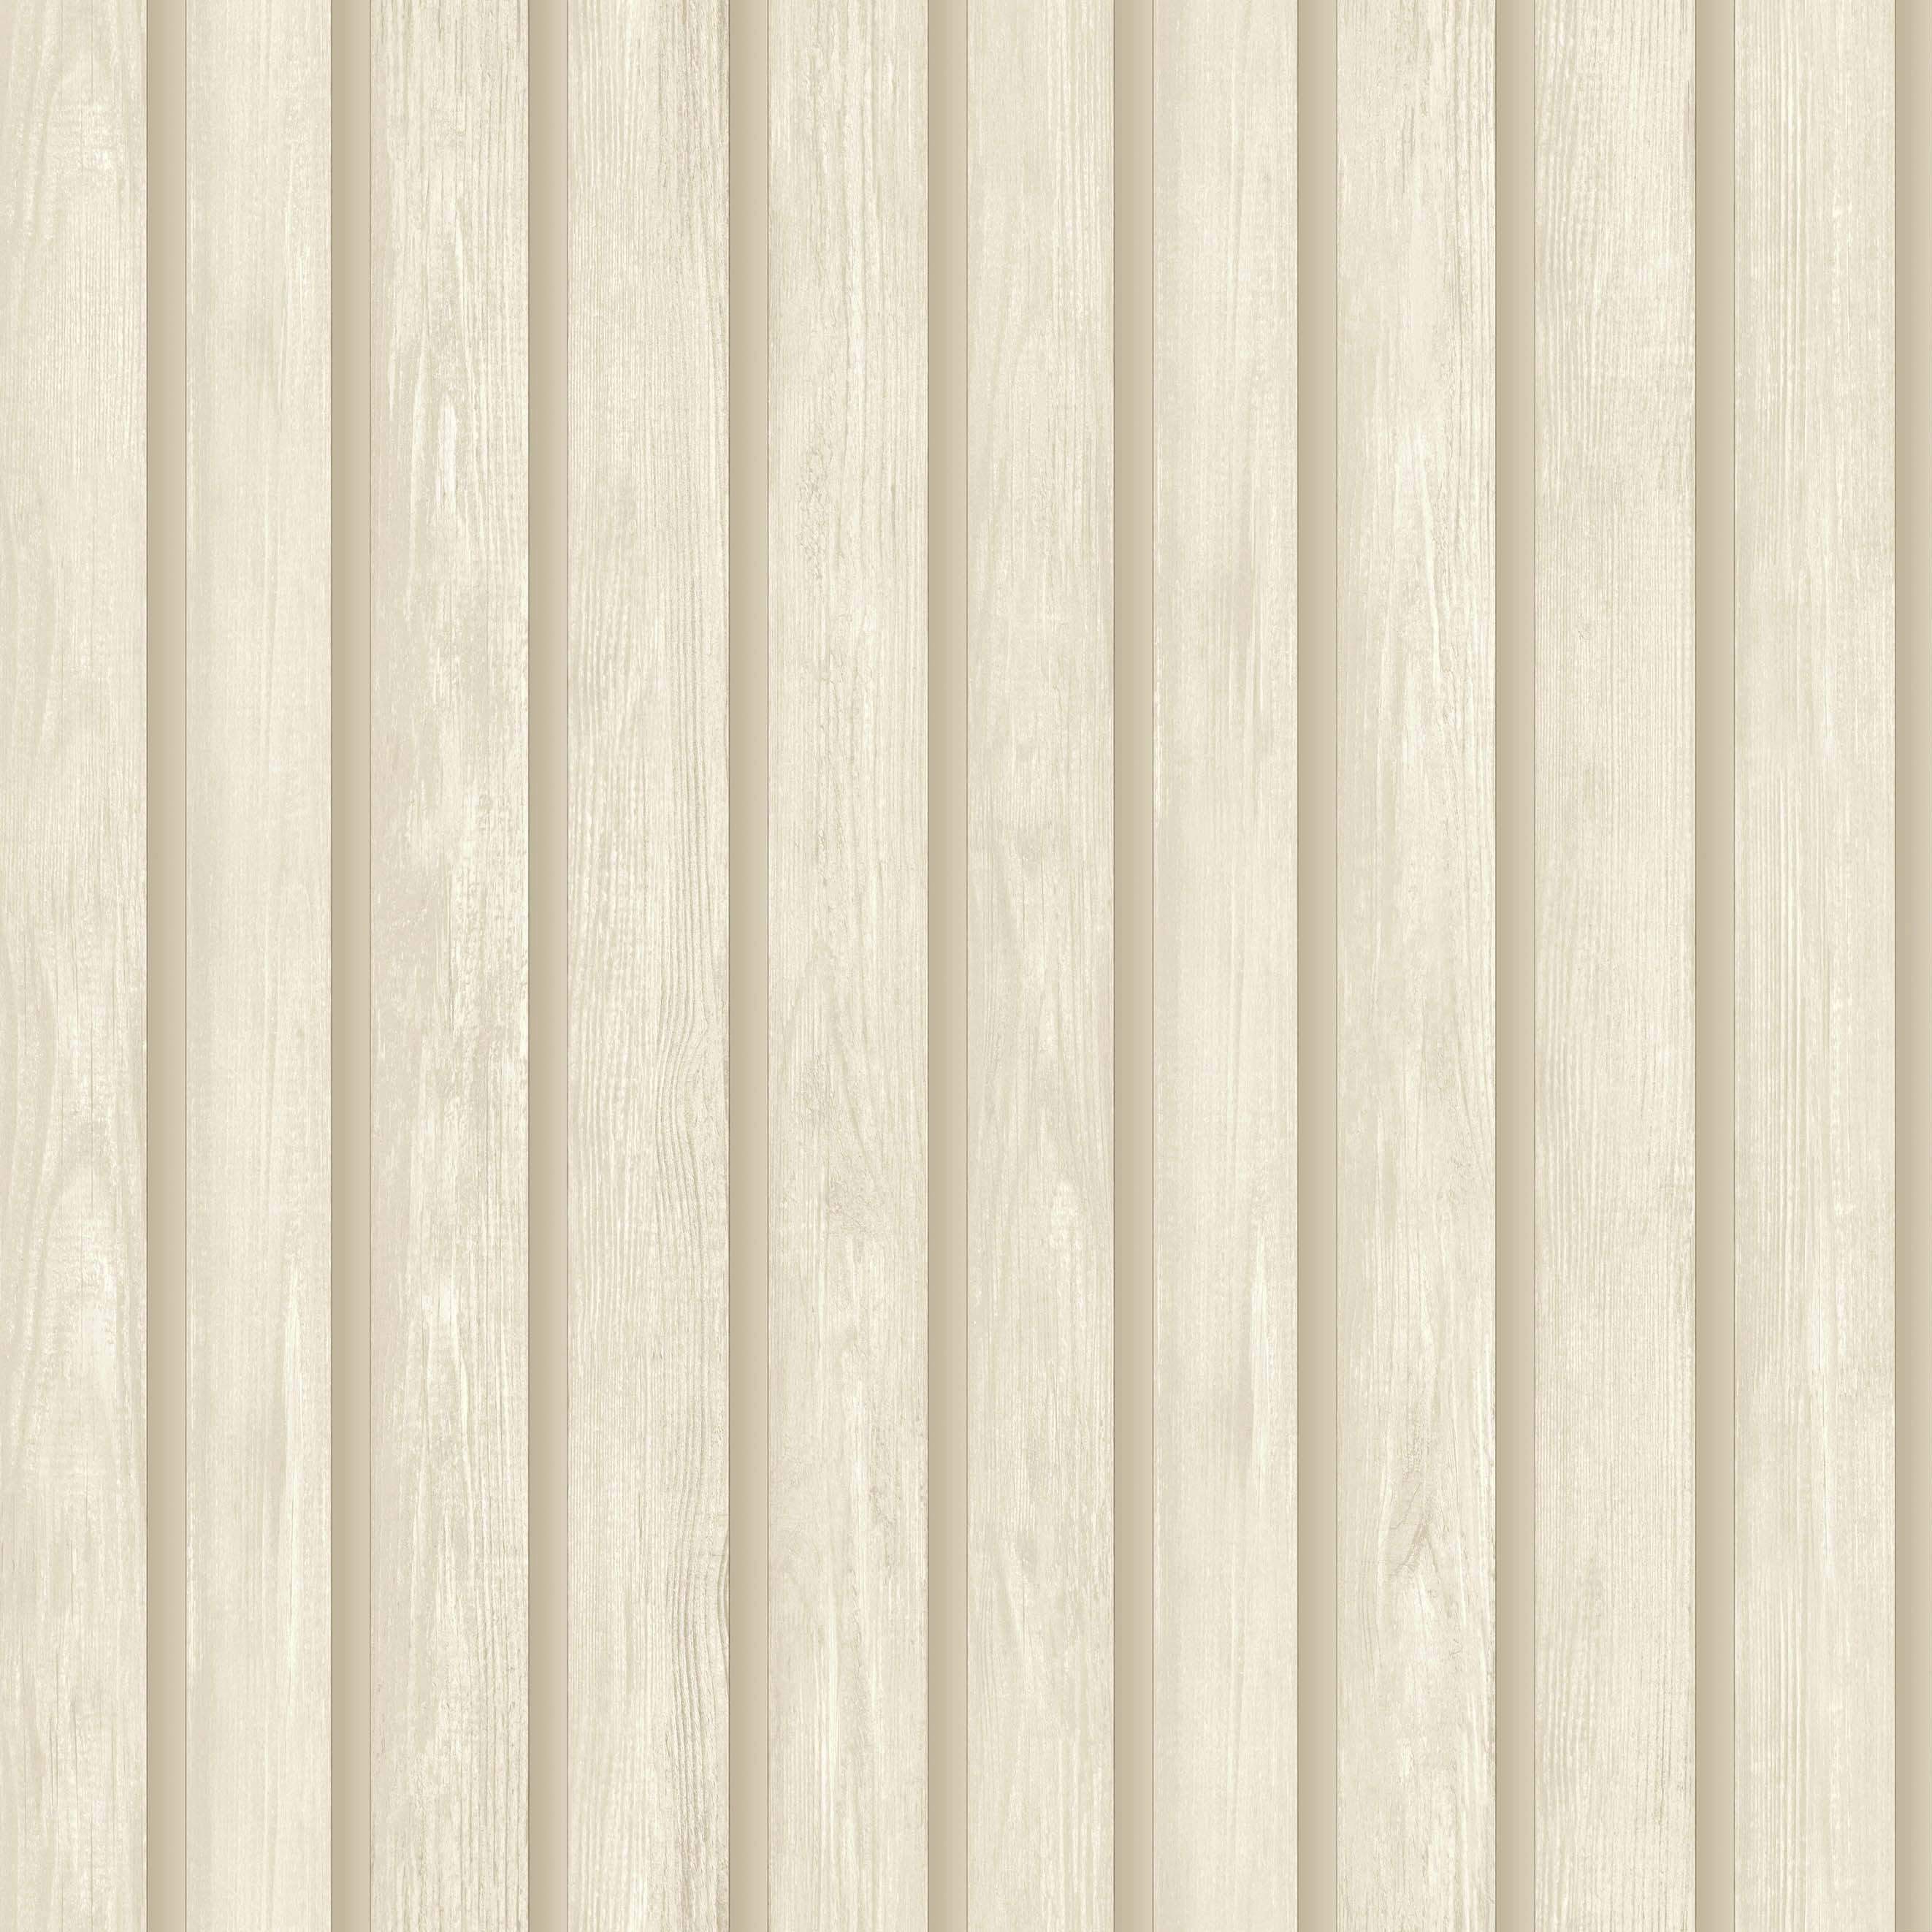 Holden Decor Wood Slat Natural Wallpaper - 10.05m x 53cm